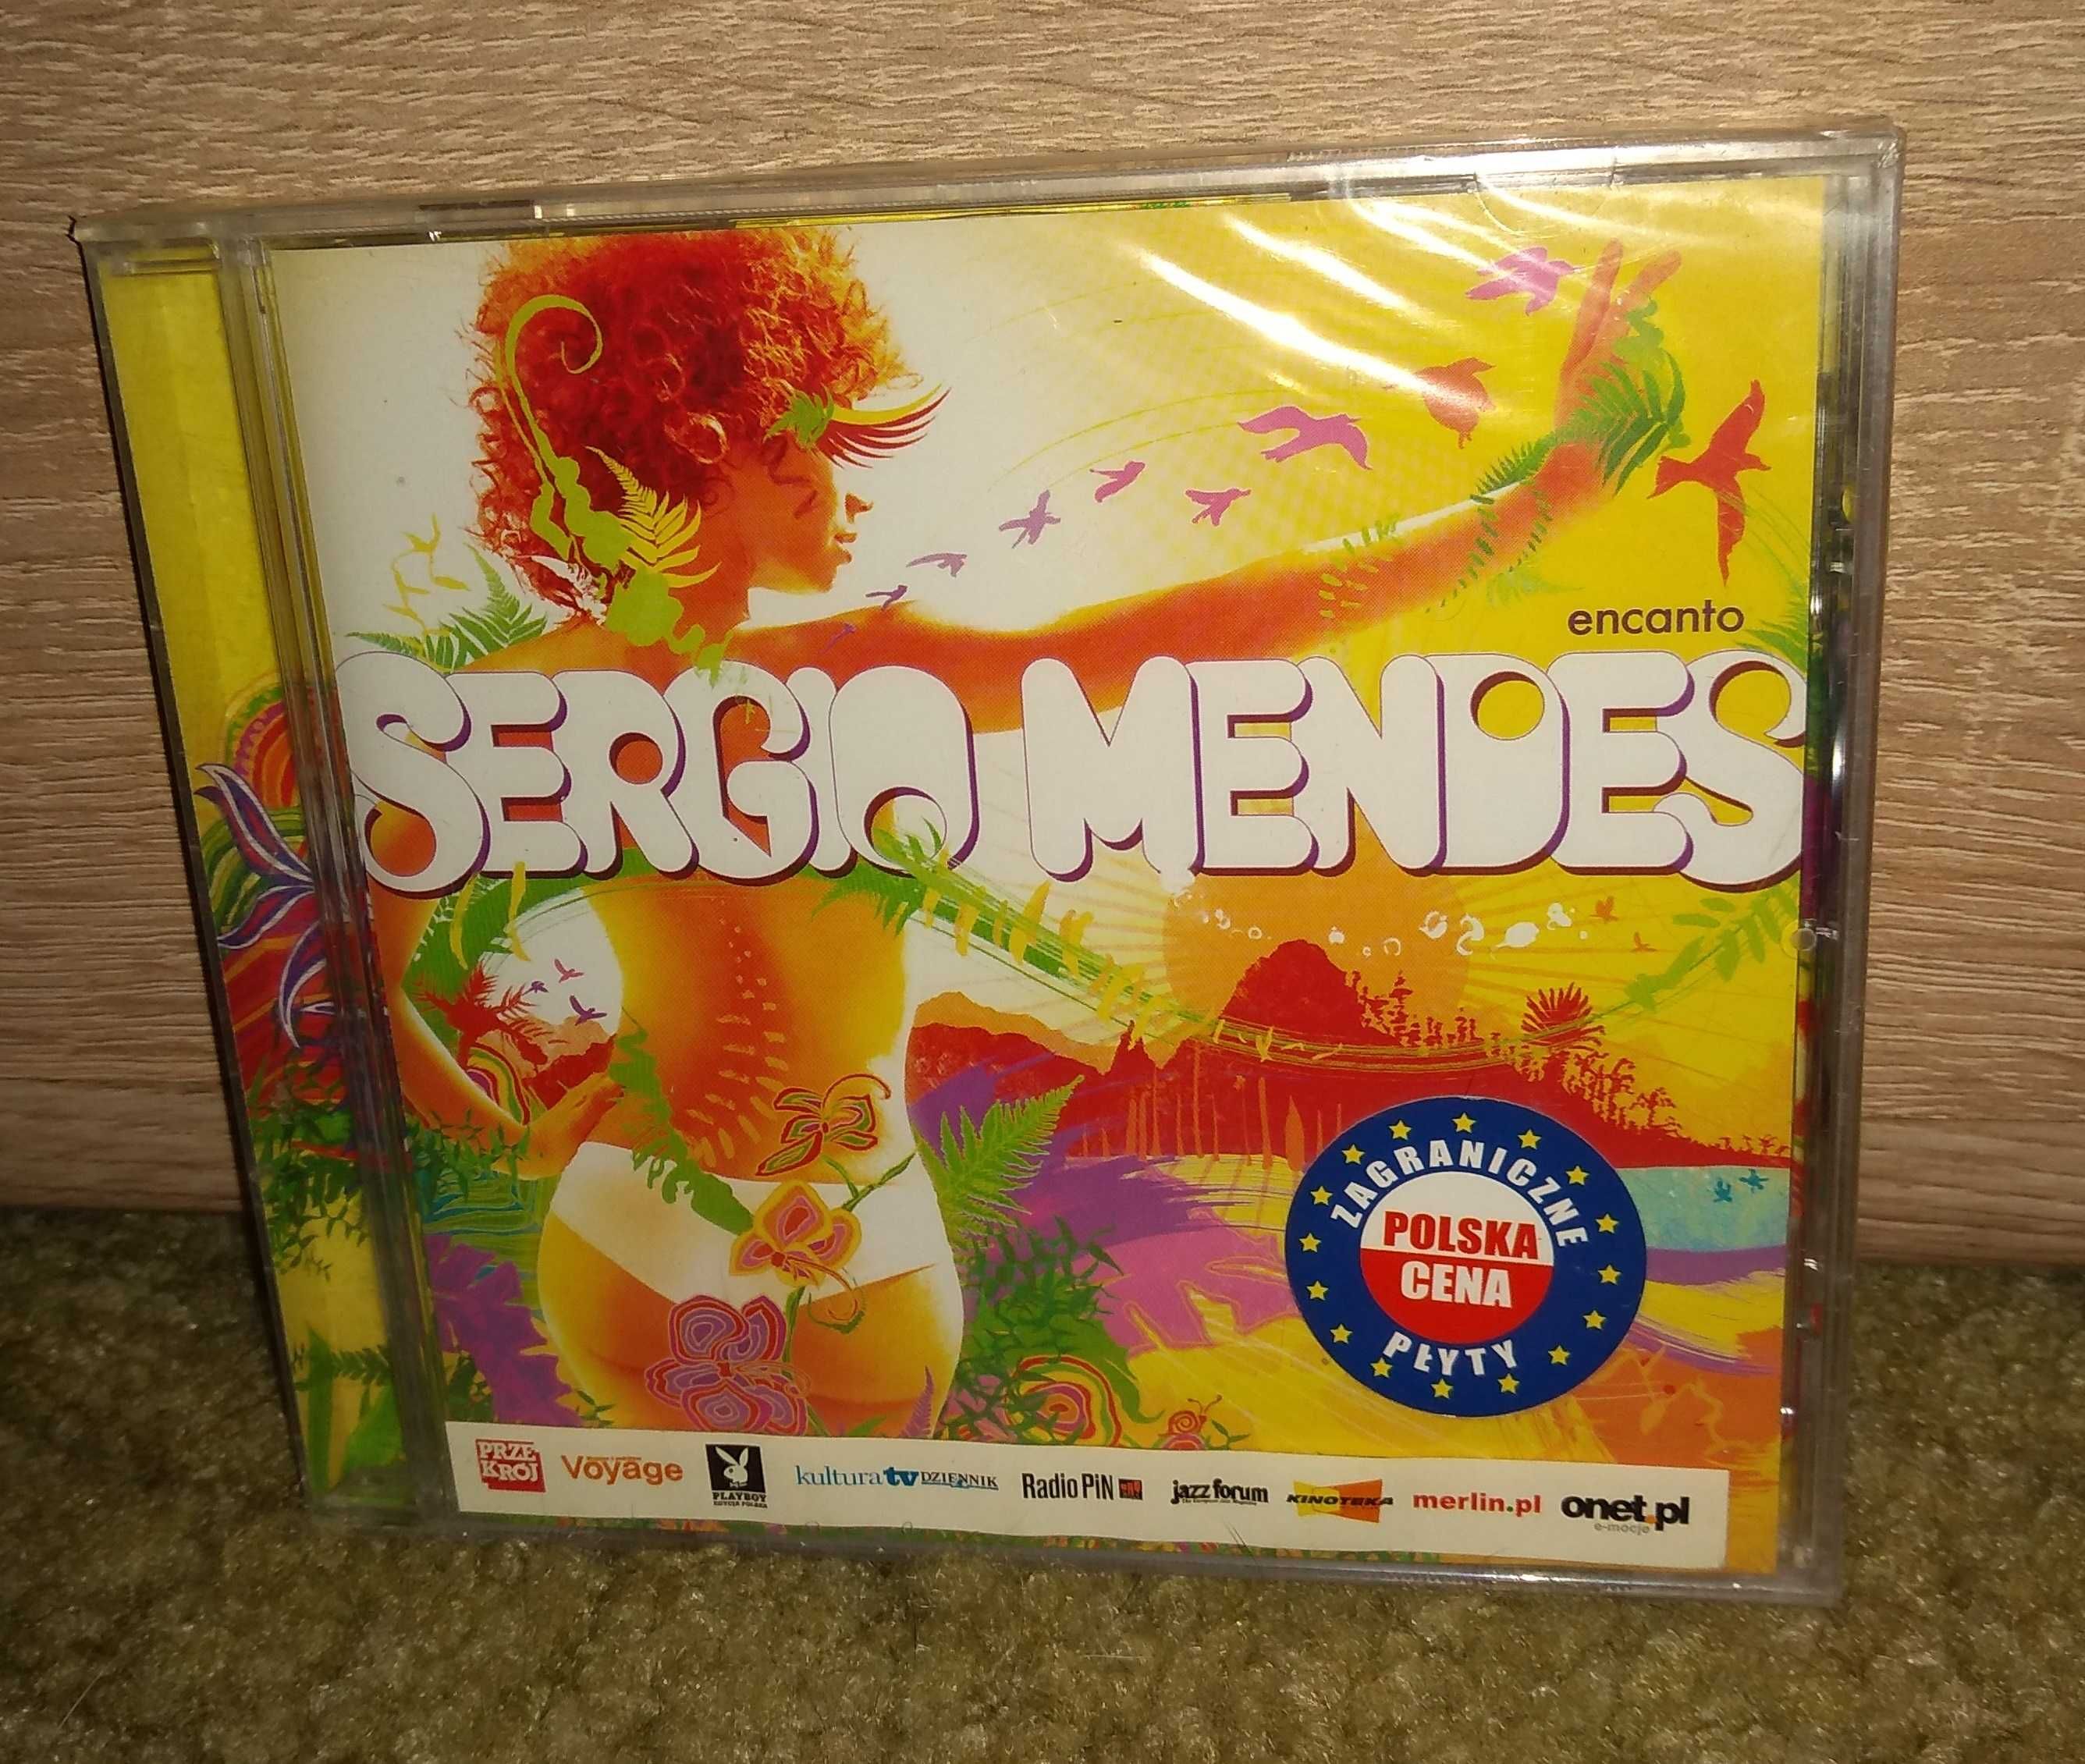 Encanto / Sergio Mendes / CD / FOLIA /